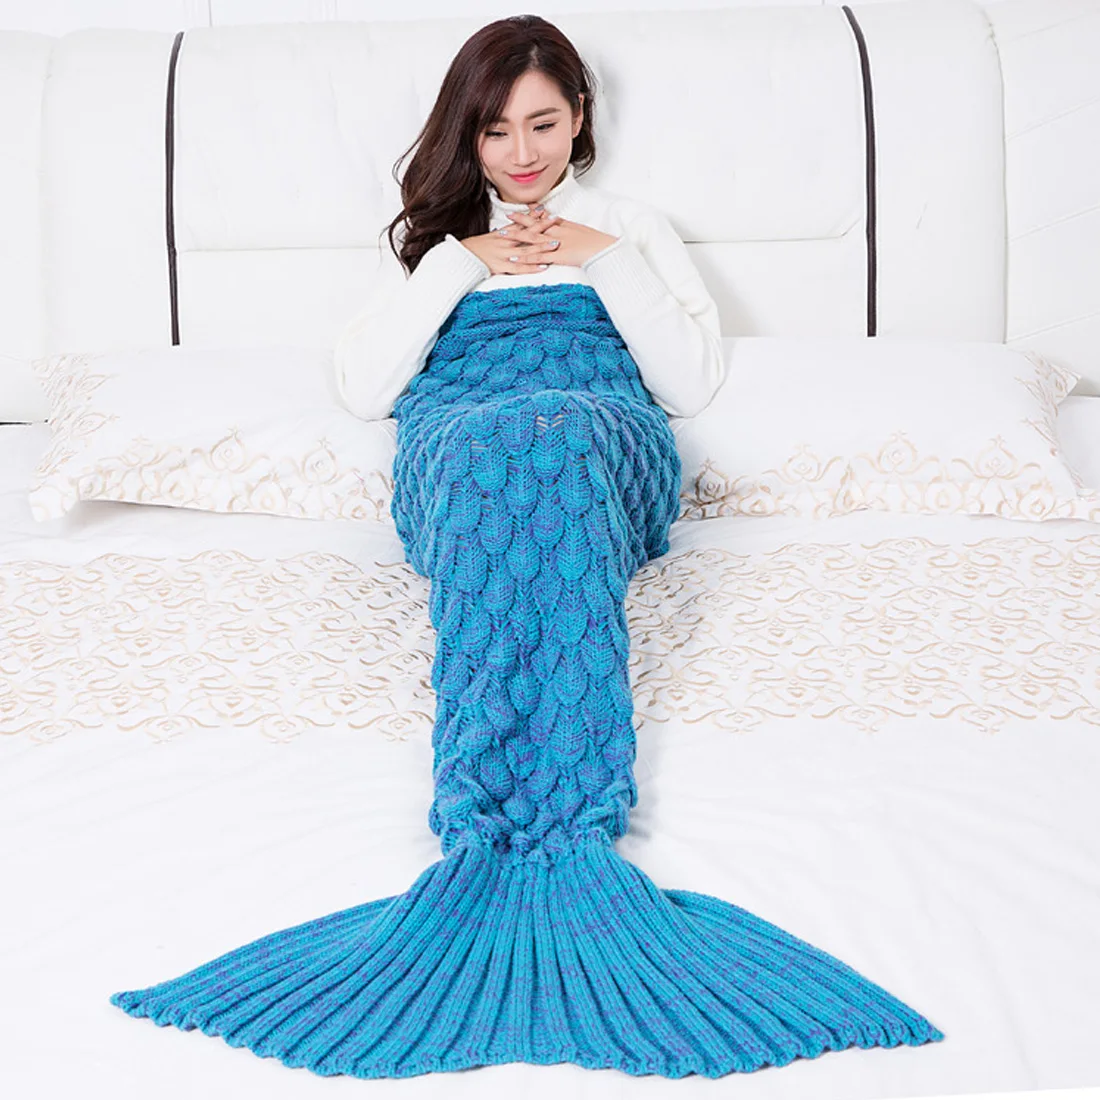 Одеяло с рисунком русалки и чешуи, одеяло с хвостом русалки, теплое покрывало для дивана, кровати, пушистое покрывало, вязаное одеяло русалки, 4 размера